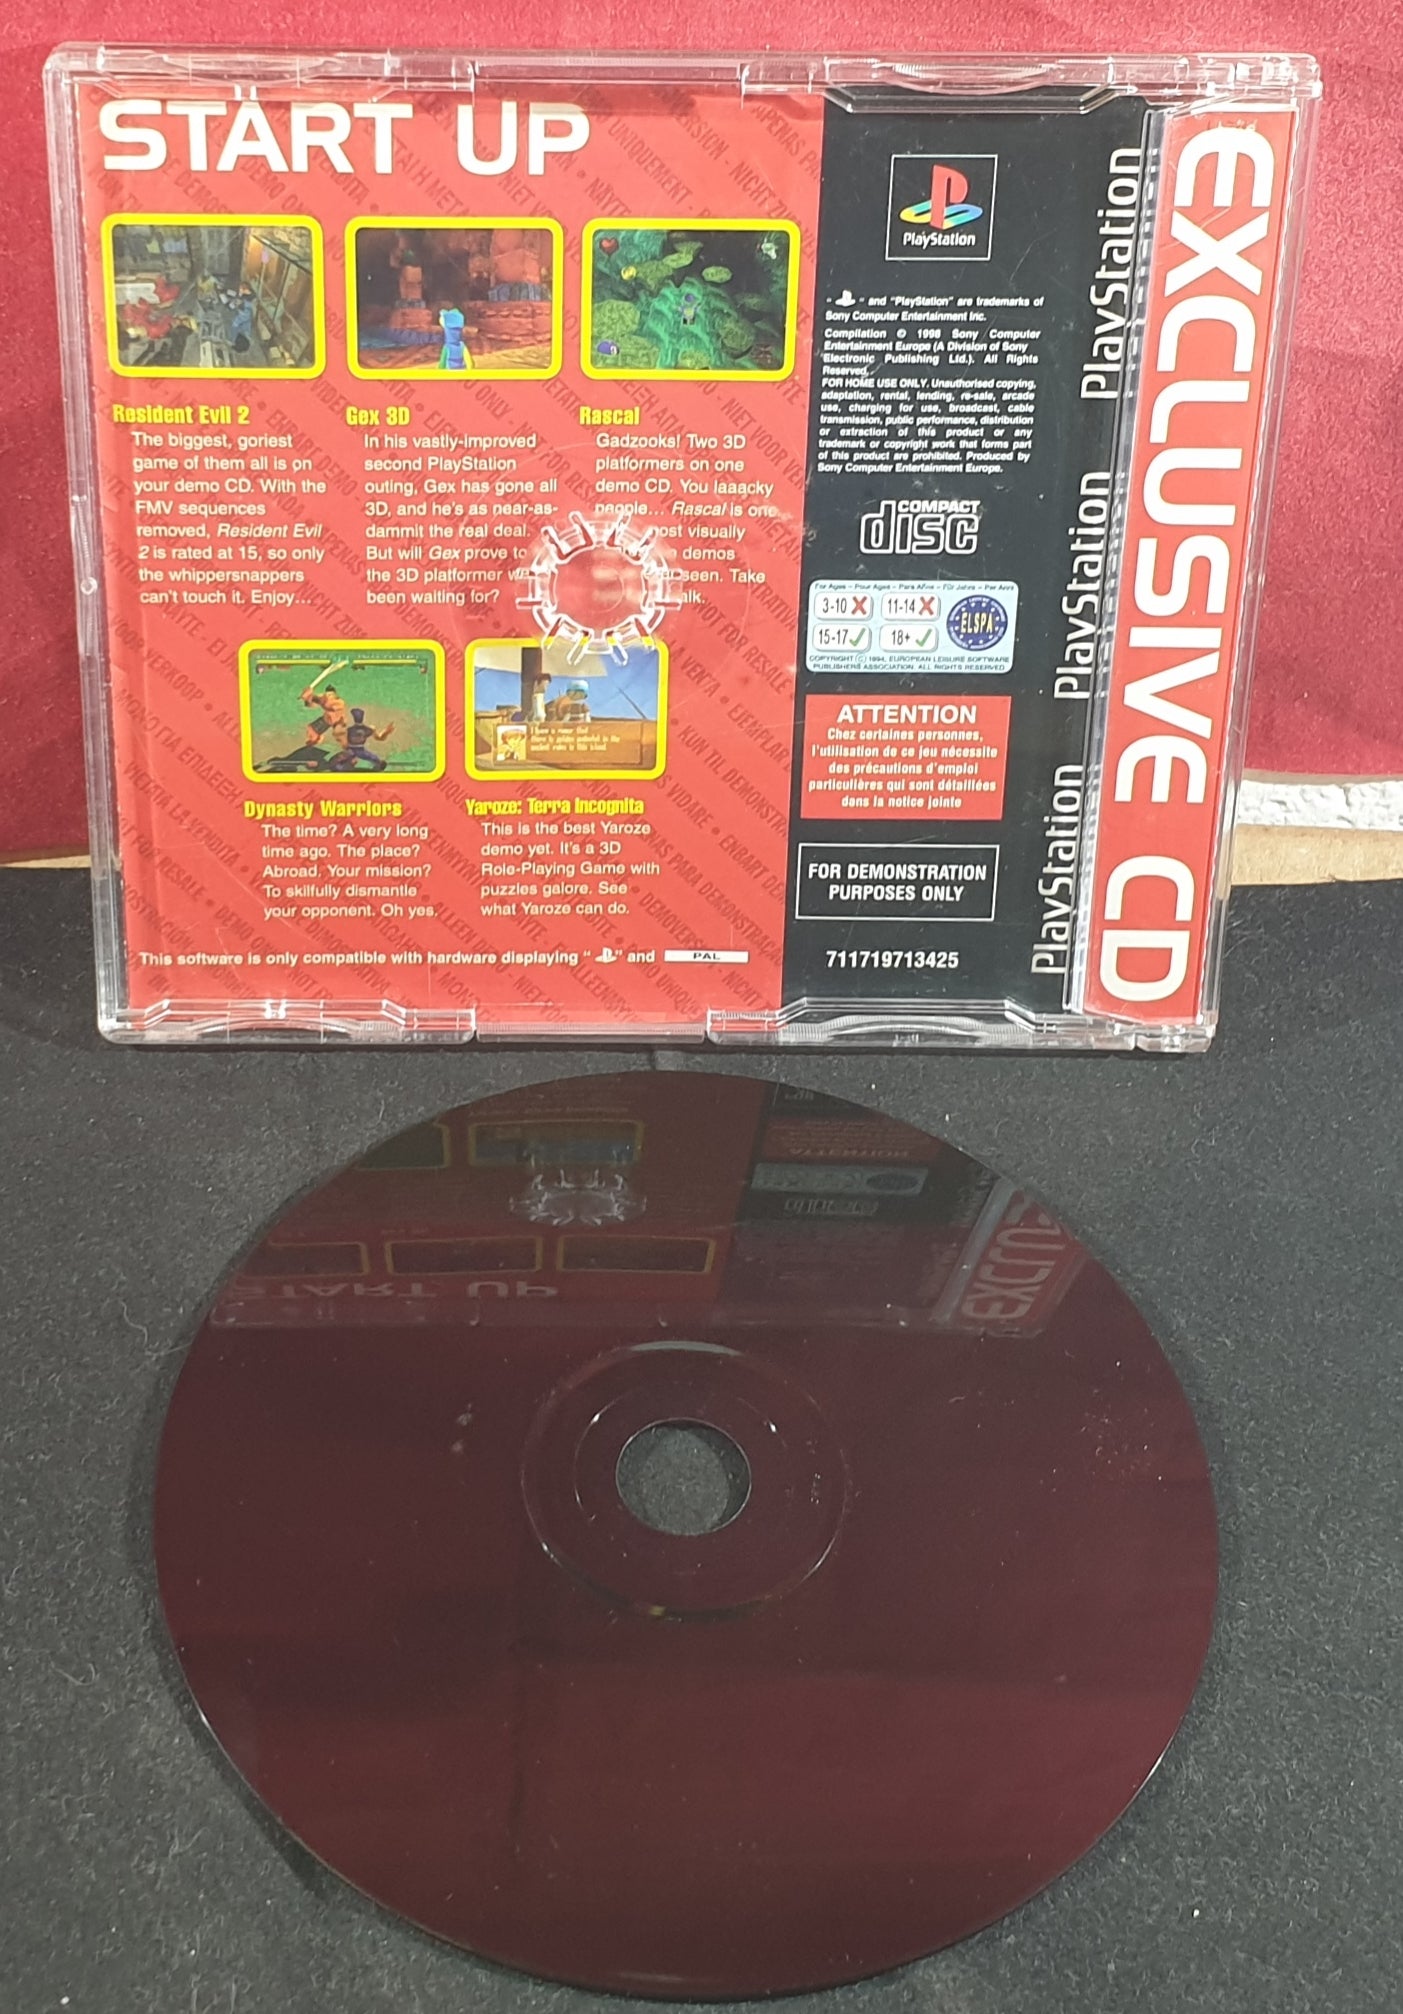 Sony Playstation 1 (PS1) Magazine Demo Disc 14 Vol 2